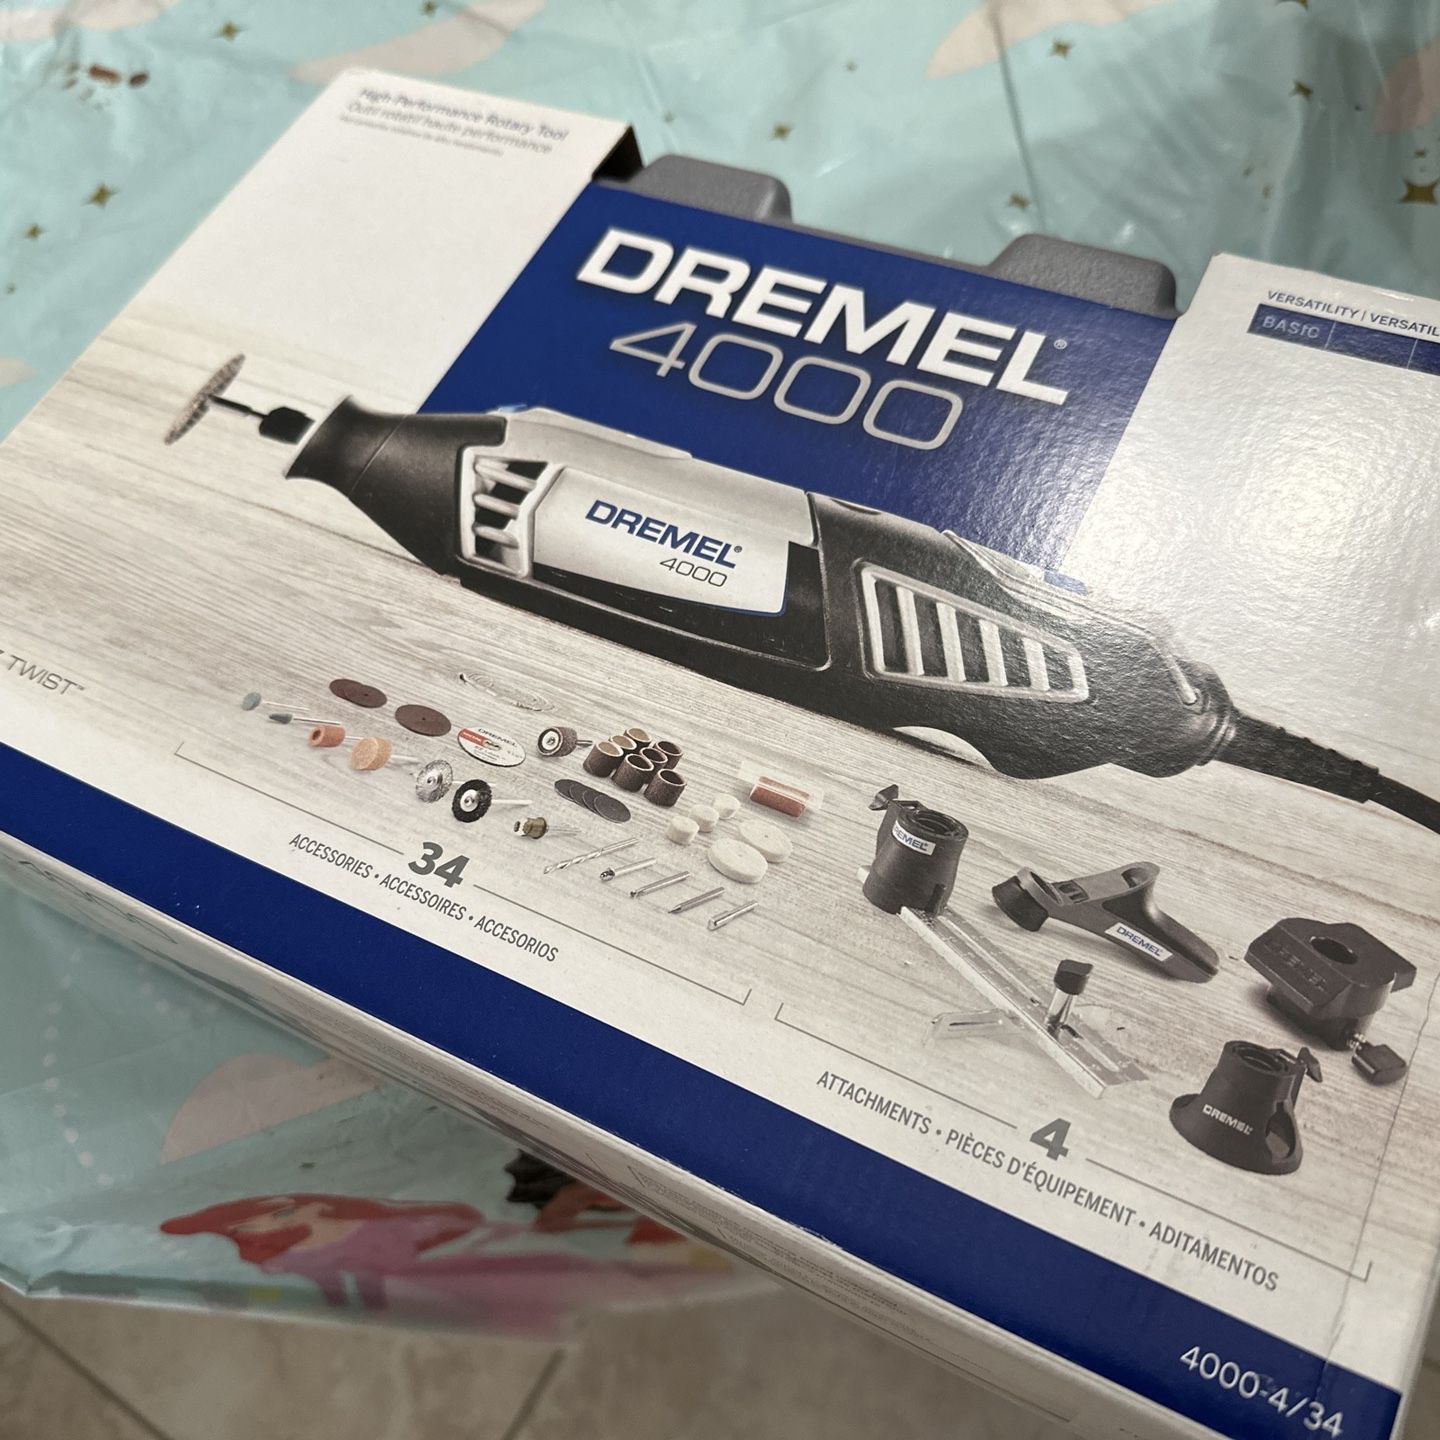 Dremel 4000-4-34 High Performance Variable-Speed Rotary Tool Kit